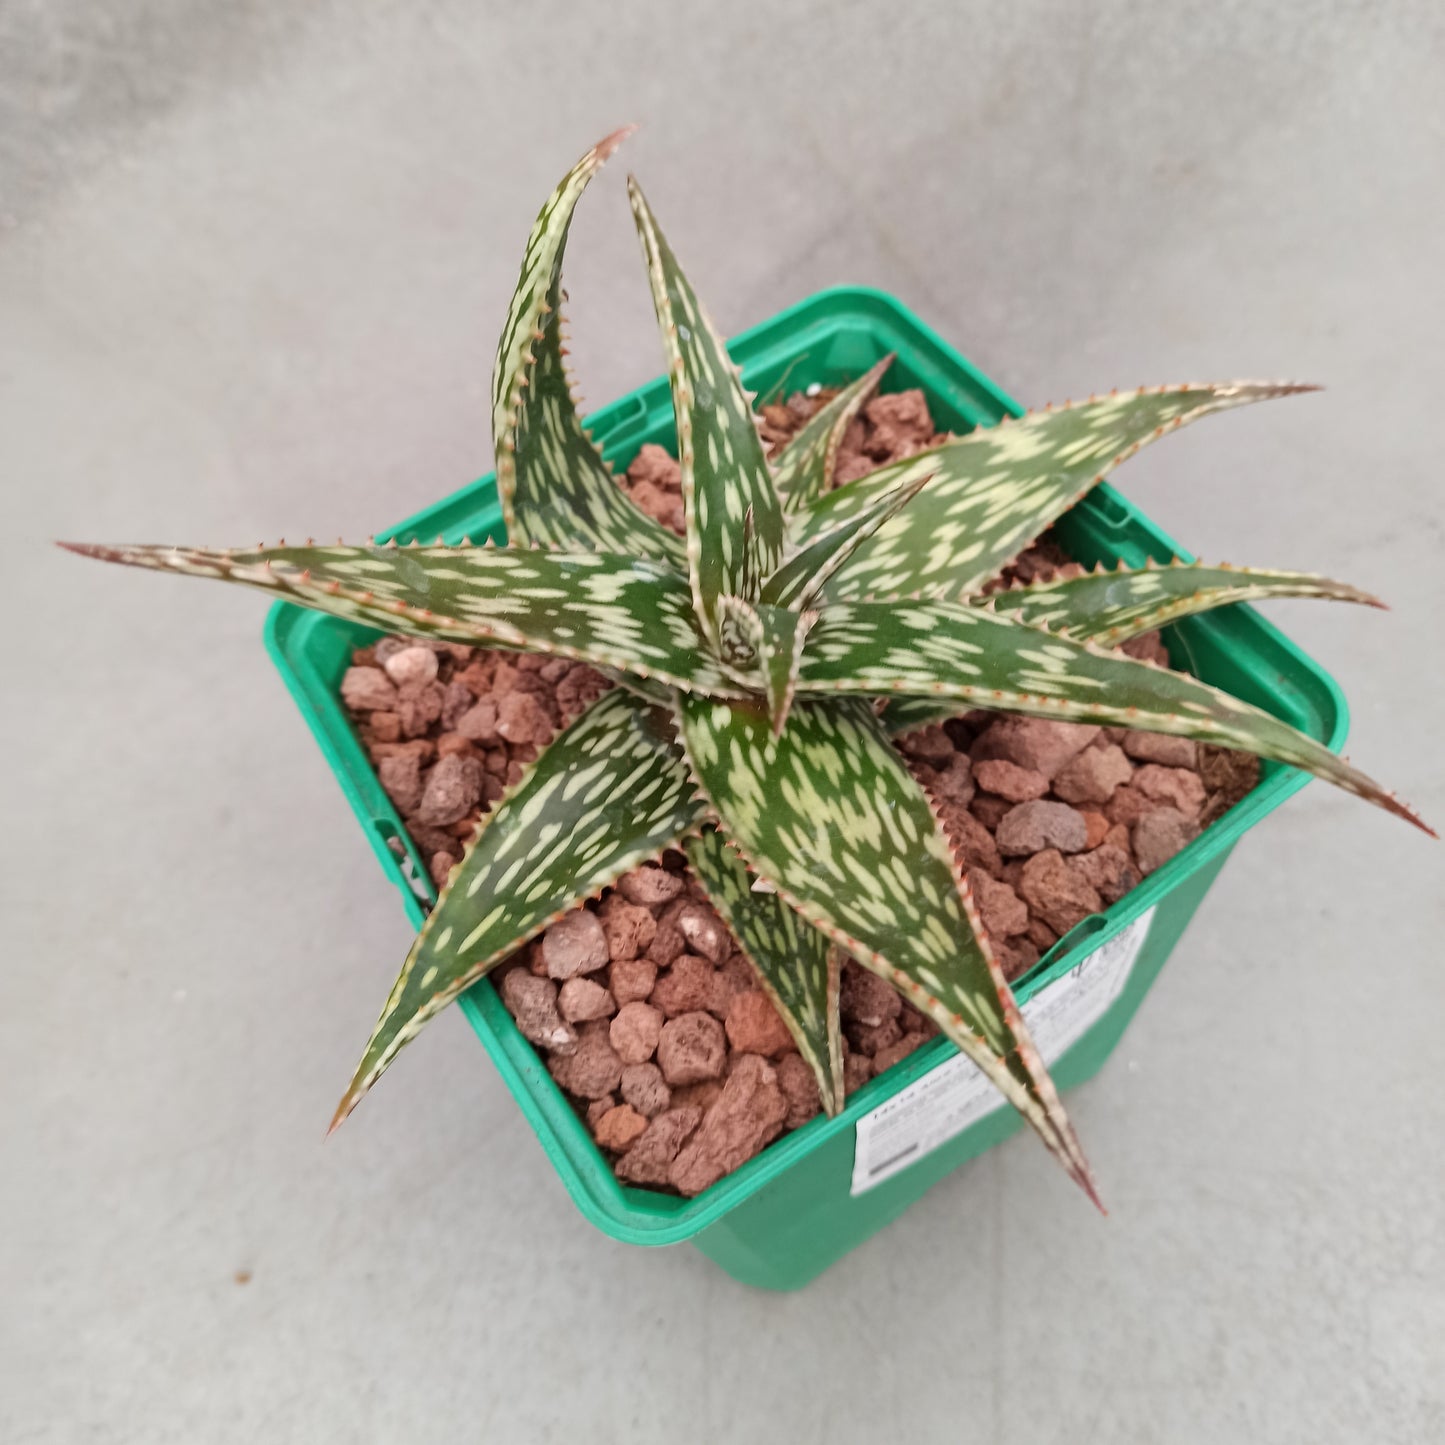 Aloe somaliensis hybrid